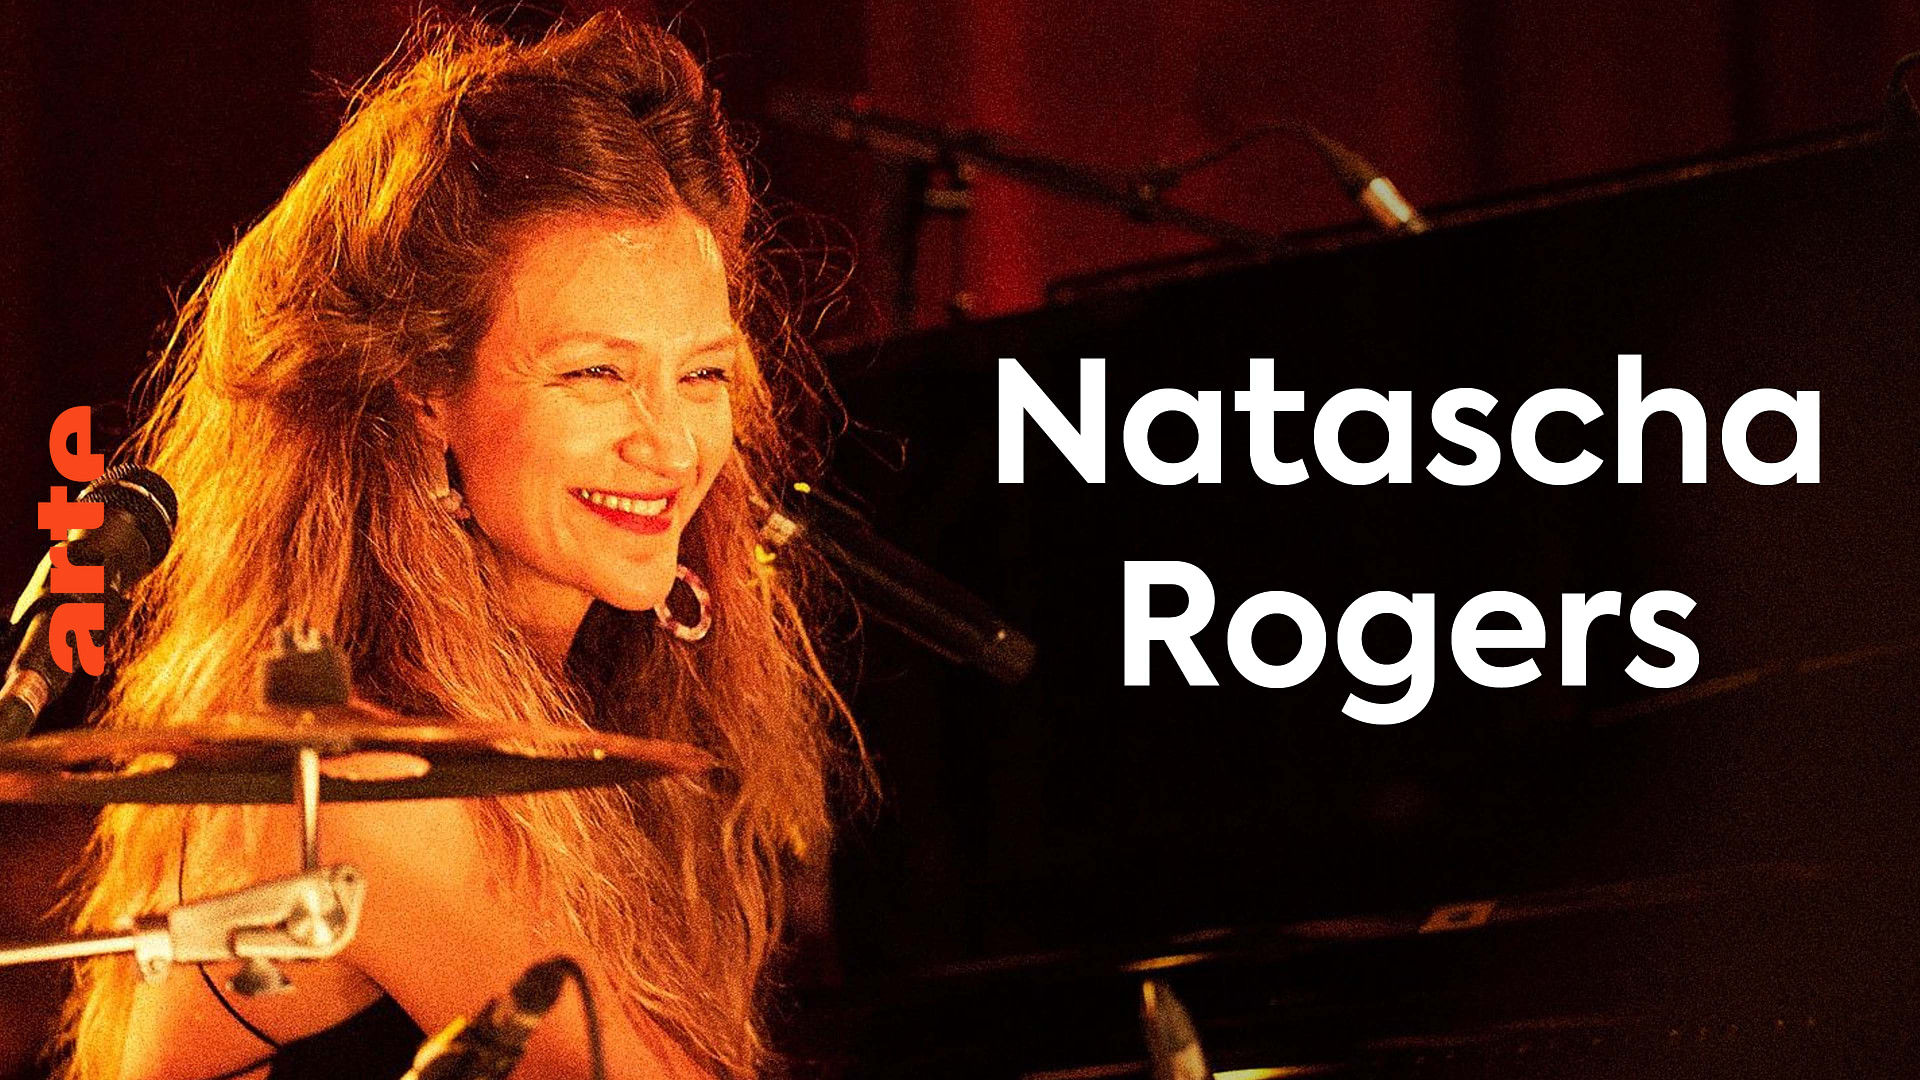 Natascha Rogers